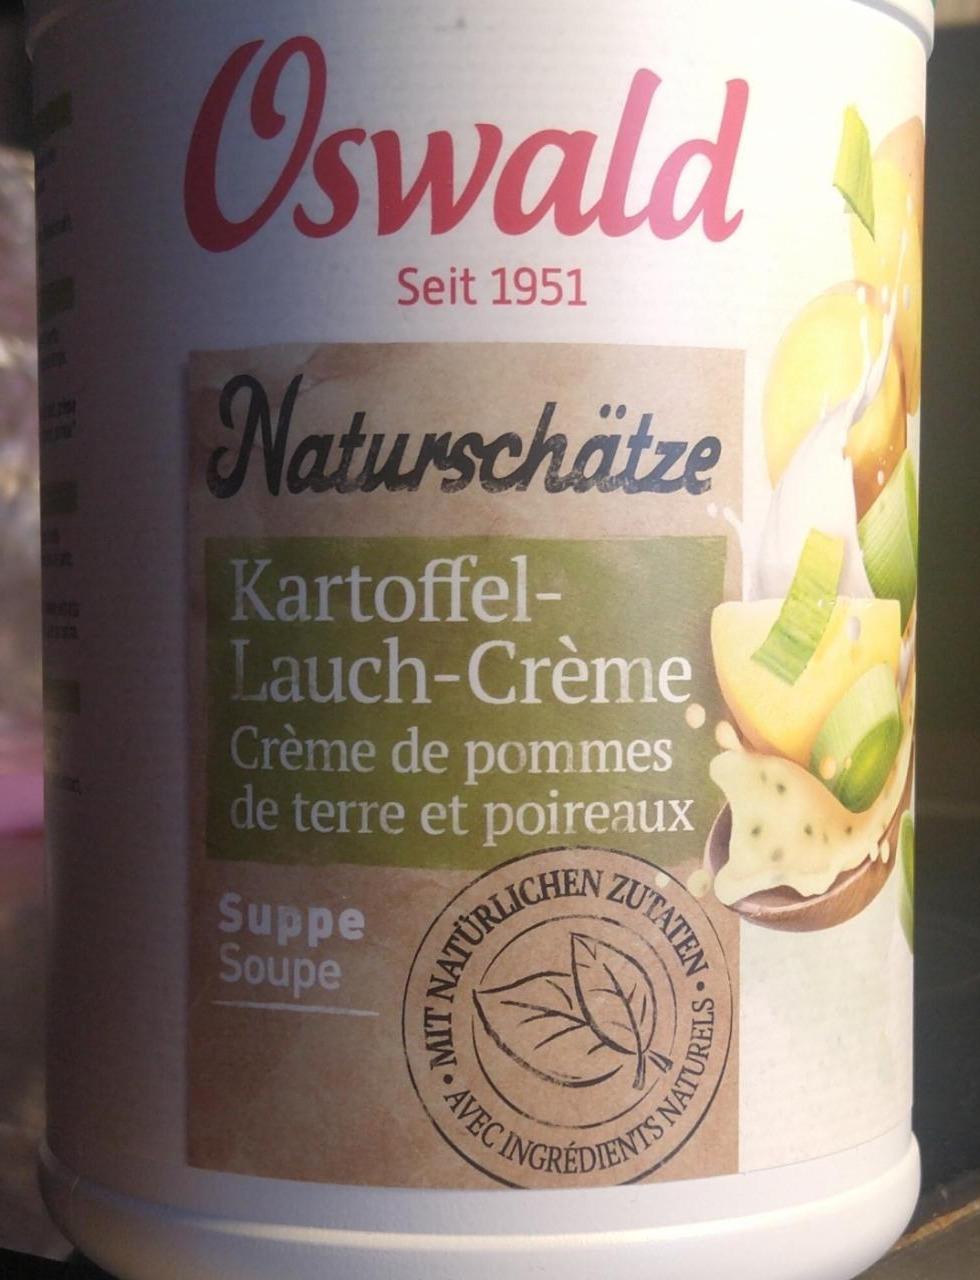 Fotografie - Naturschätze Kartoffel-Lauch-Crème Suppe Oswald